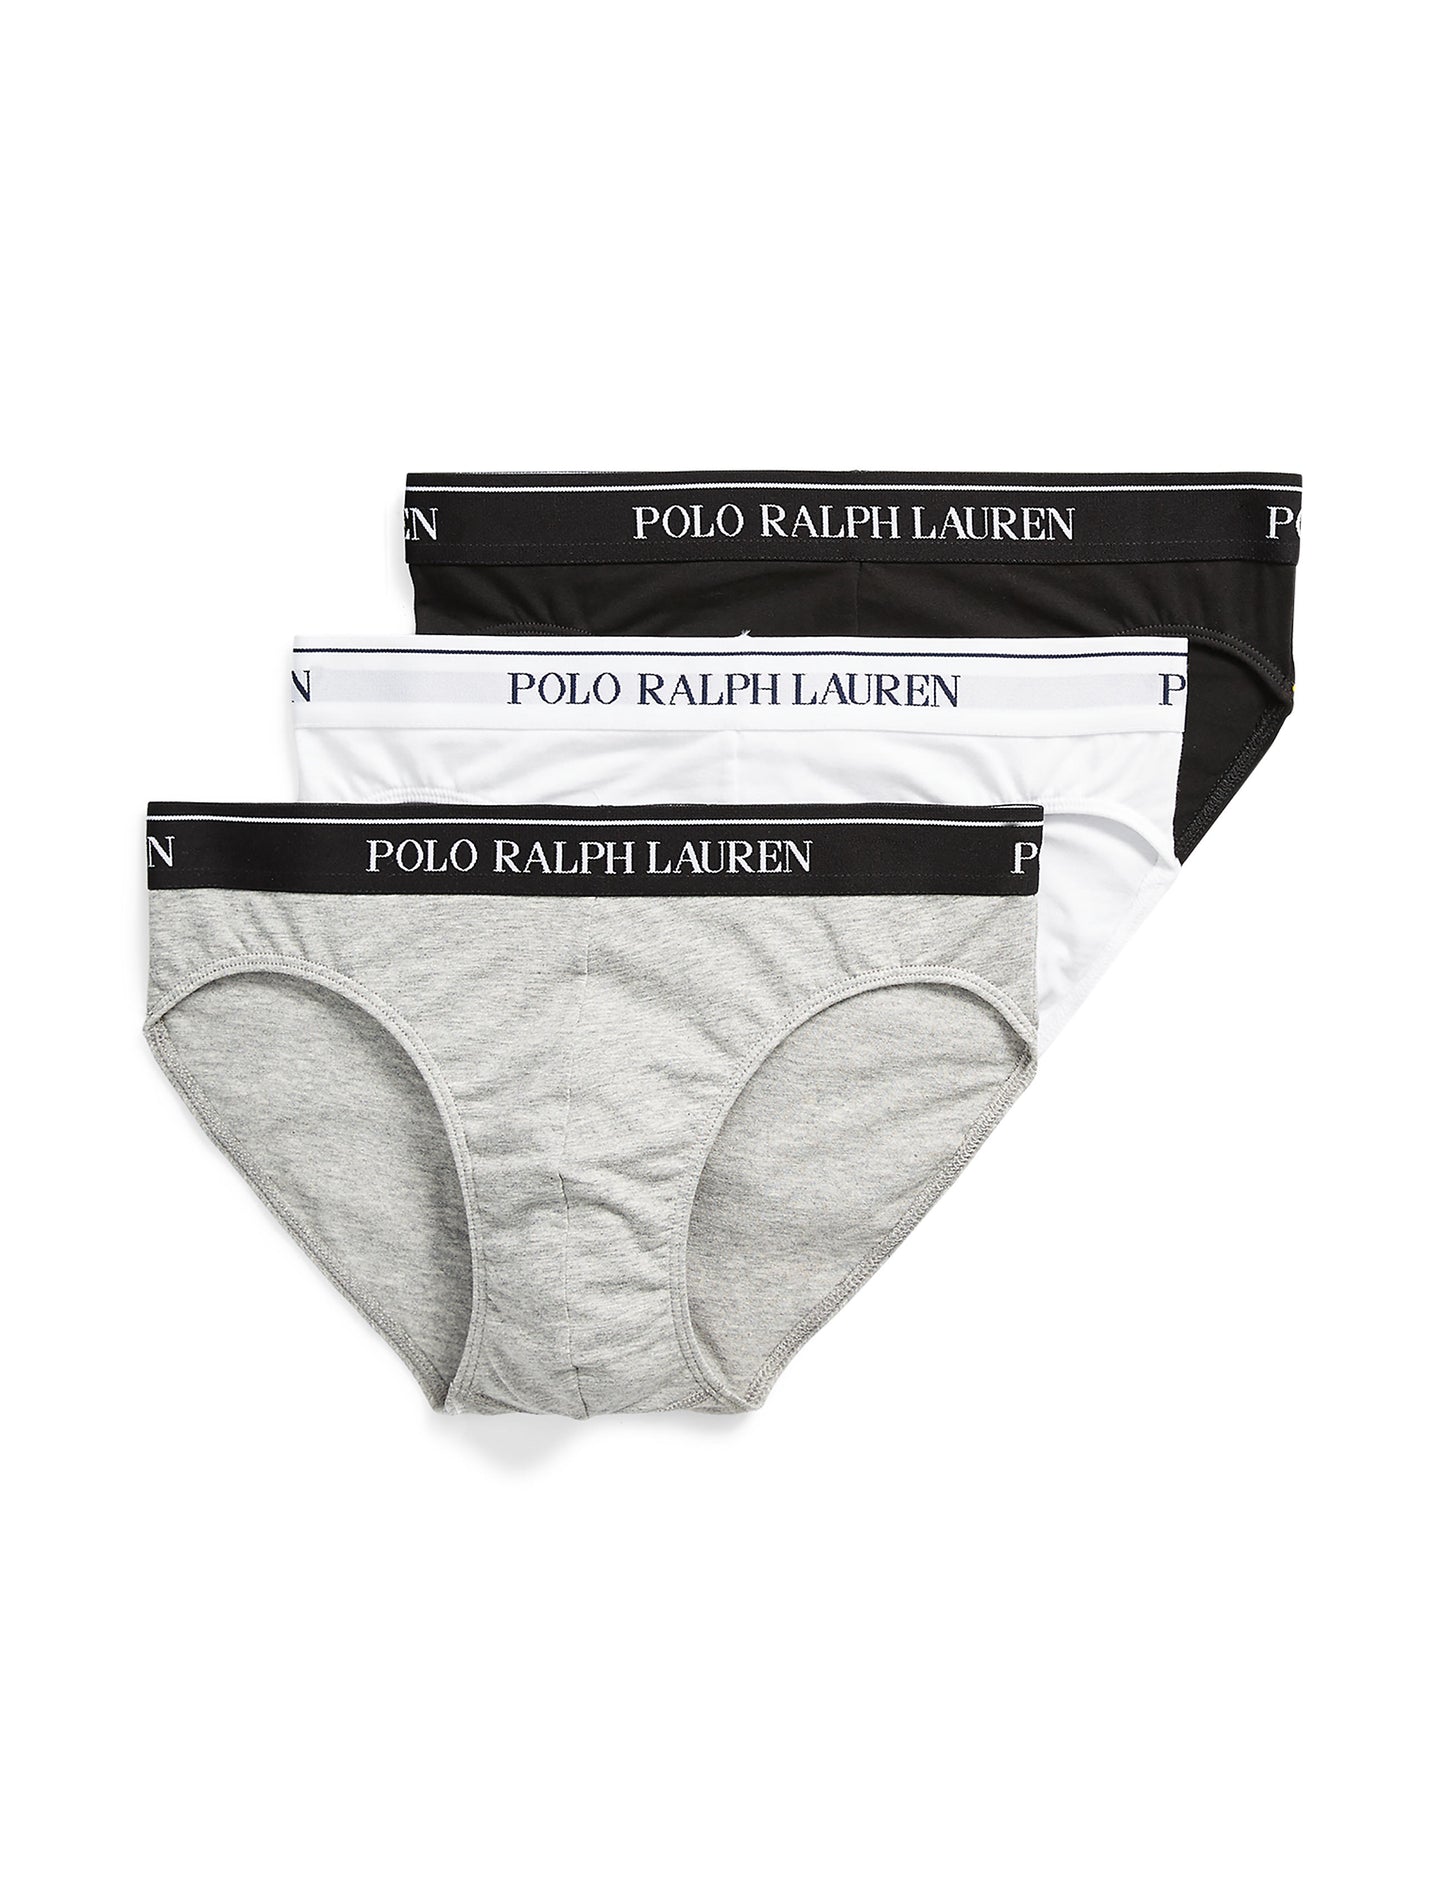 Polo Ralph Lauren Cotton Brief 3pk White/Black/Heather